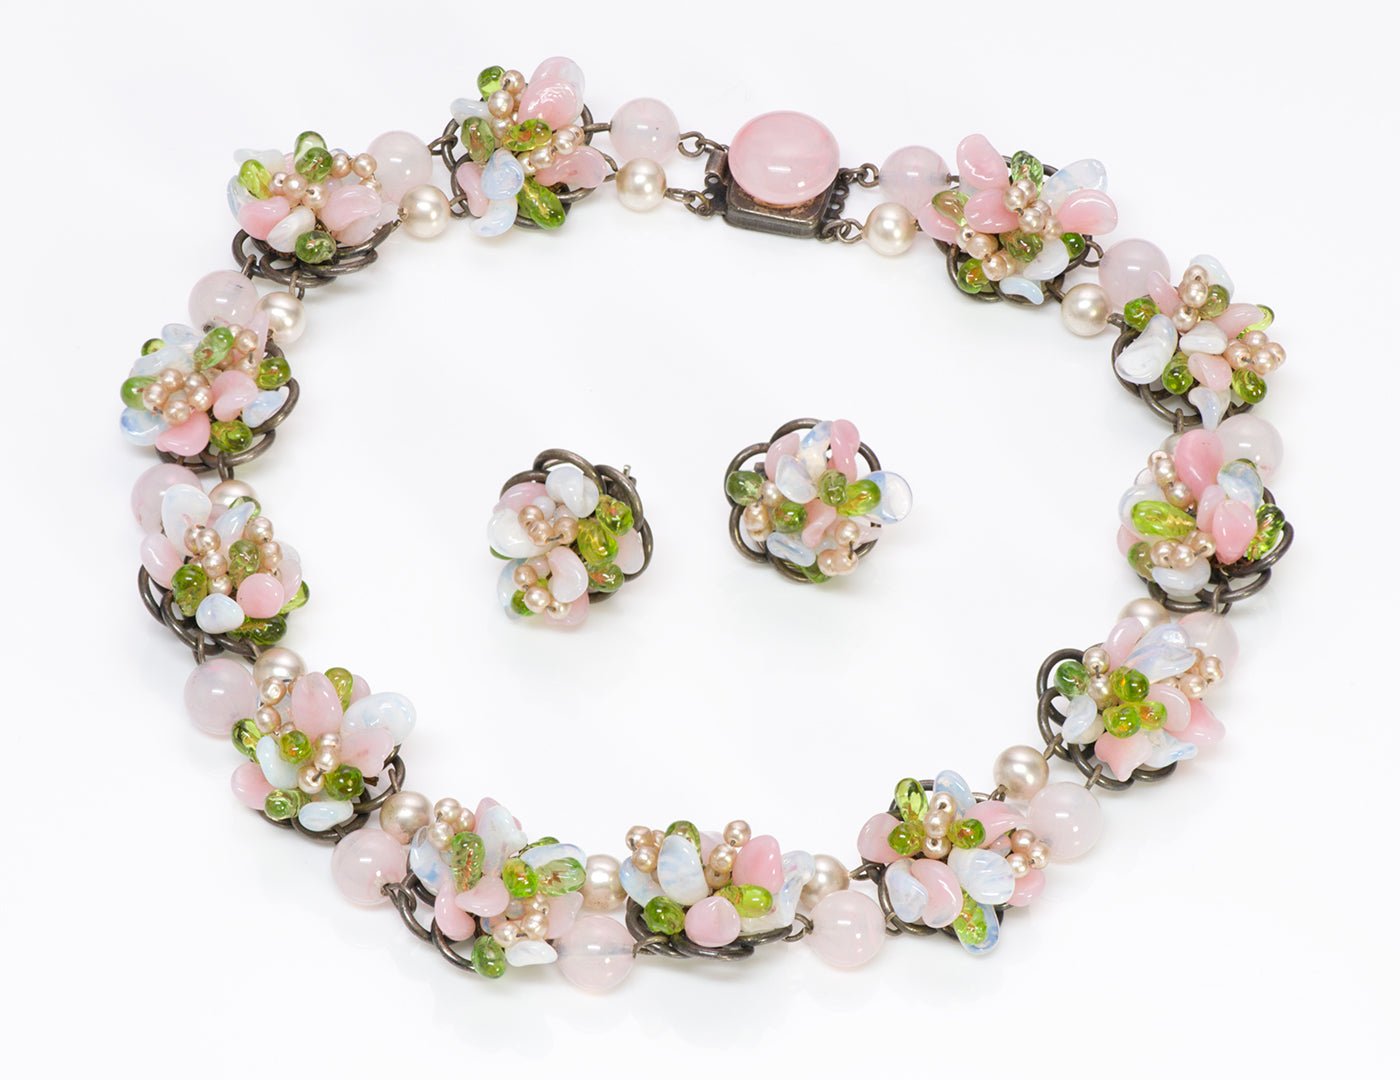 Louis Rousselet 1950’s Flower Glass Beads Necklace Earrings Set